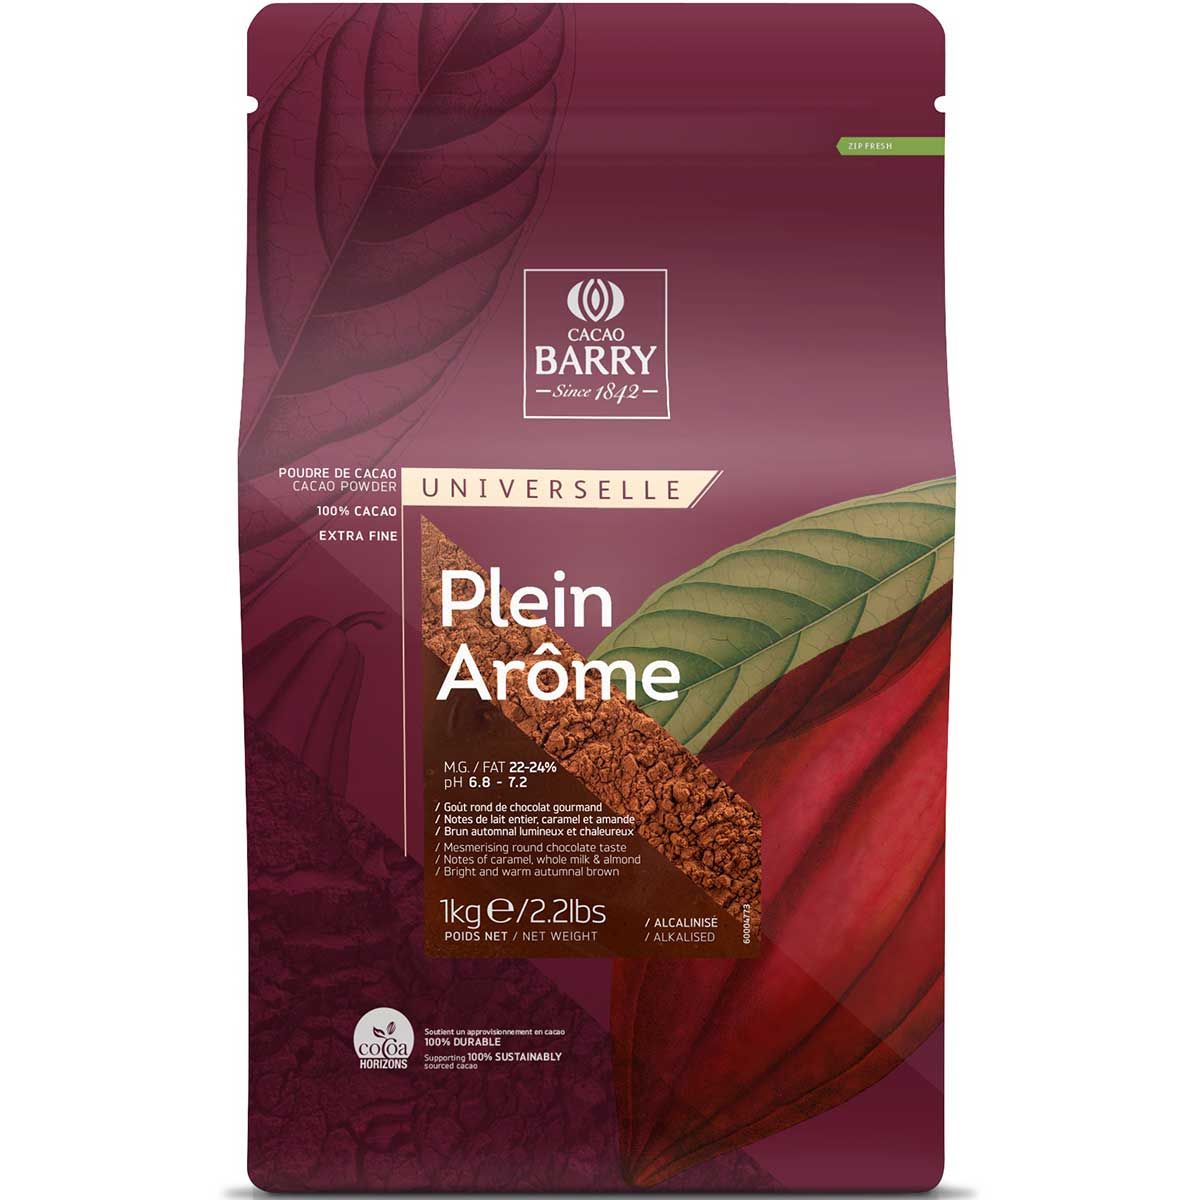 Cacao Barry Plein Arôme Kakaopulver (100%) 1kg